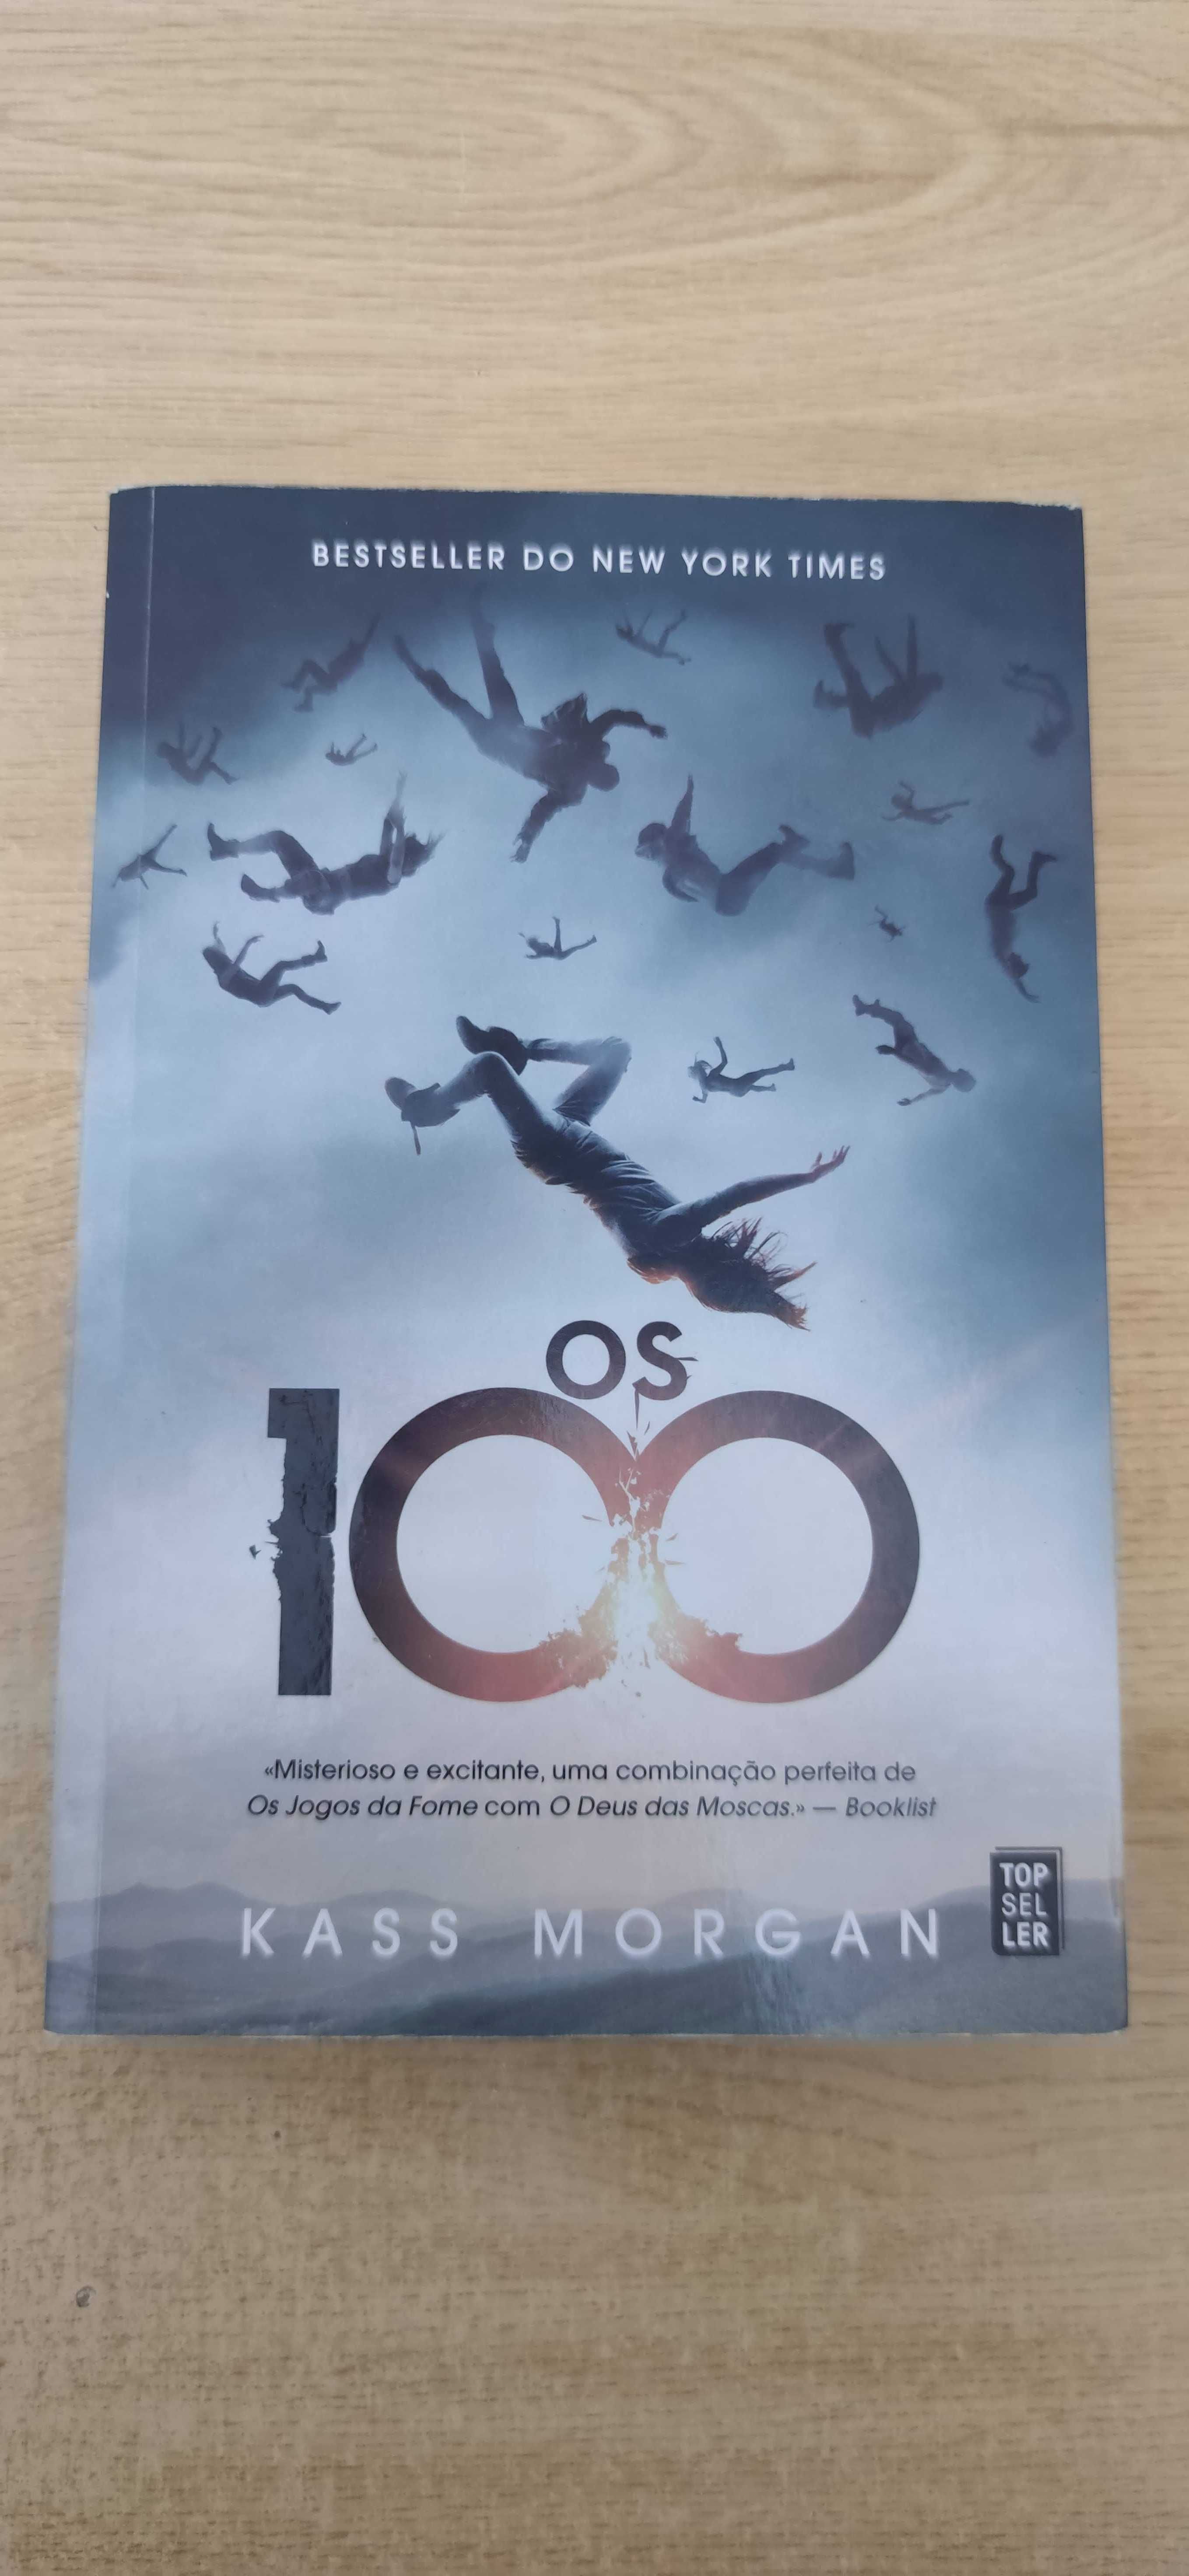 Livro - Os 100 de Kass Morgan